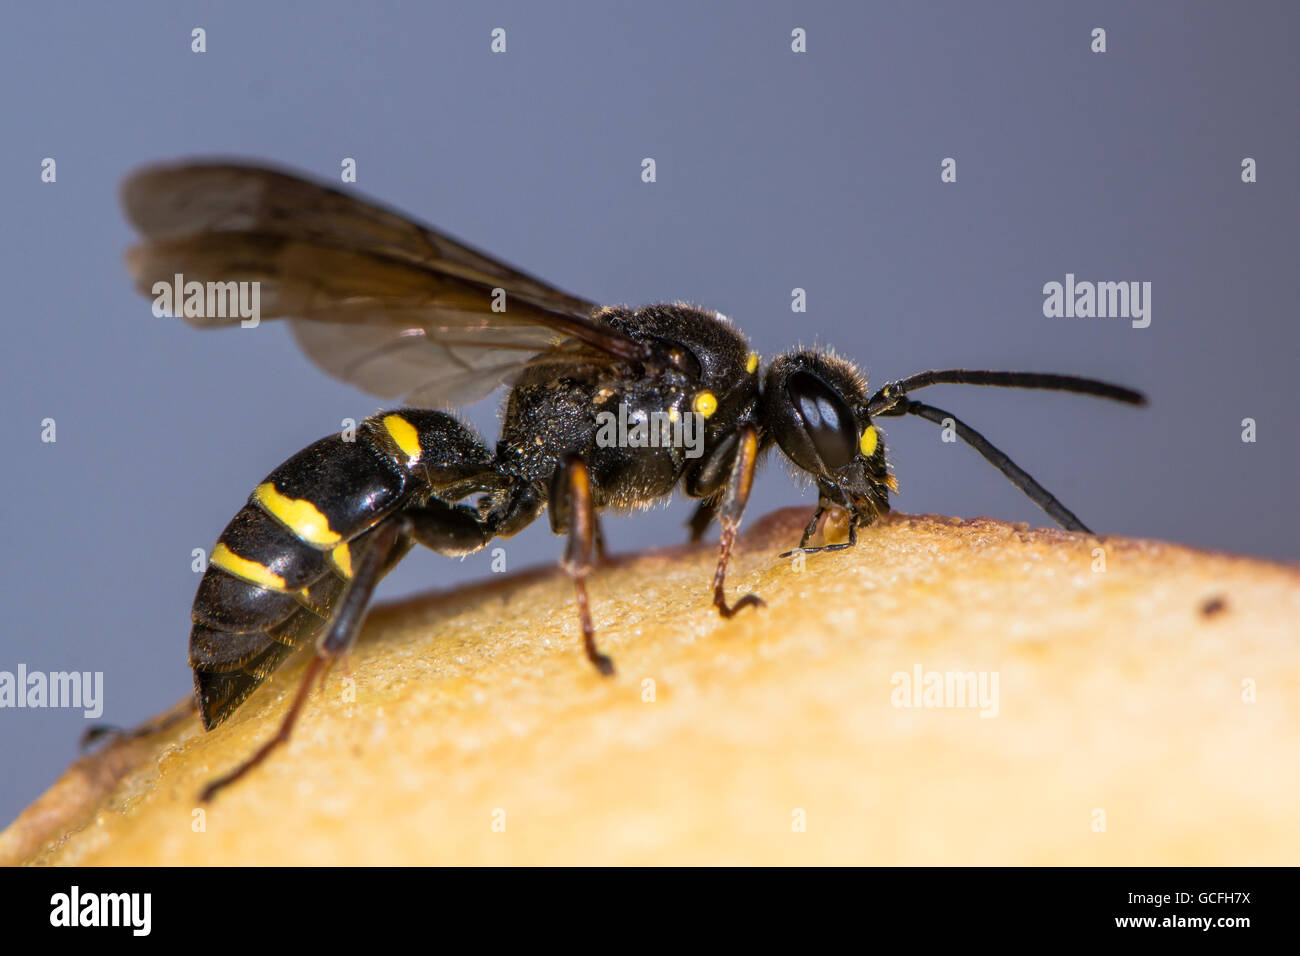 Digger wasp (Argogorytes mystaceus) eating apple. Black and yellow insect in family Crabronidae, feeding on fruit Stock Photo